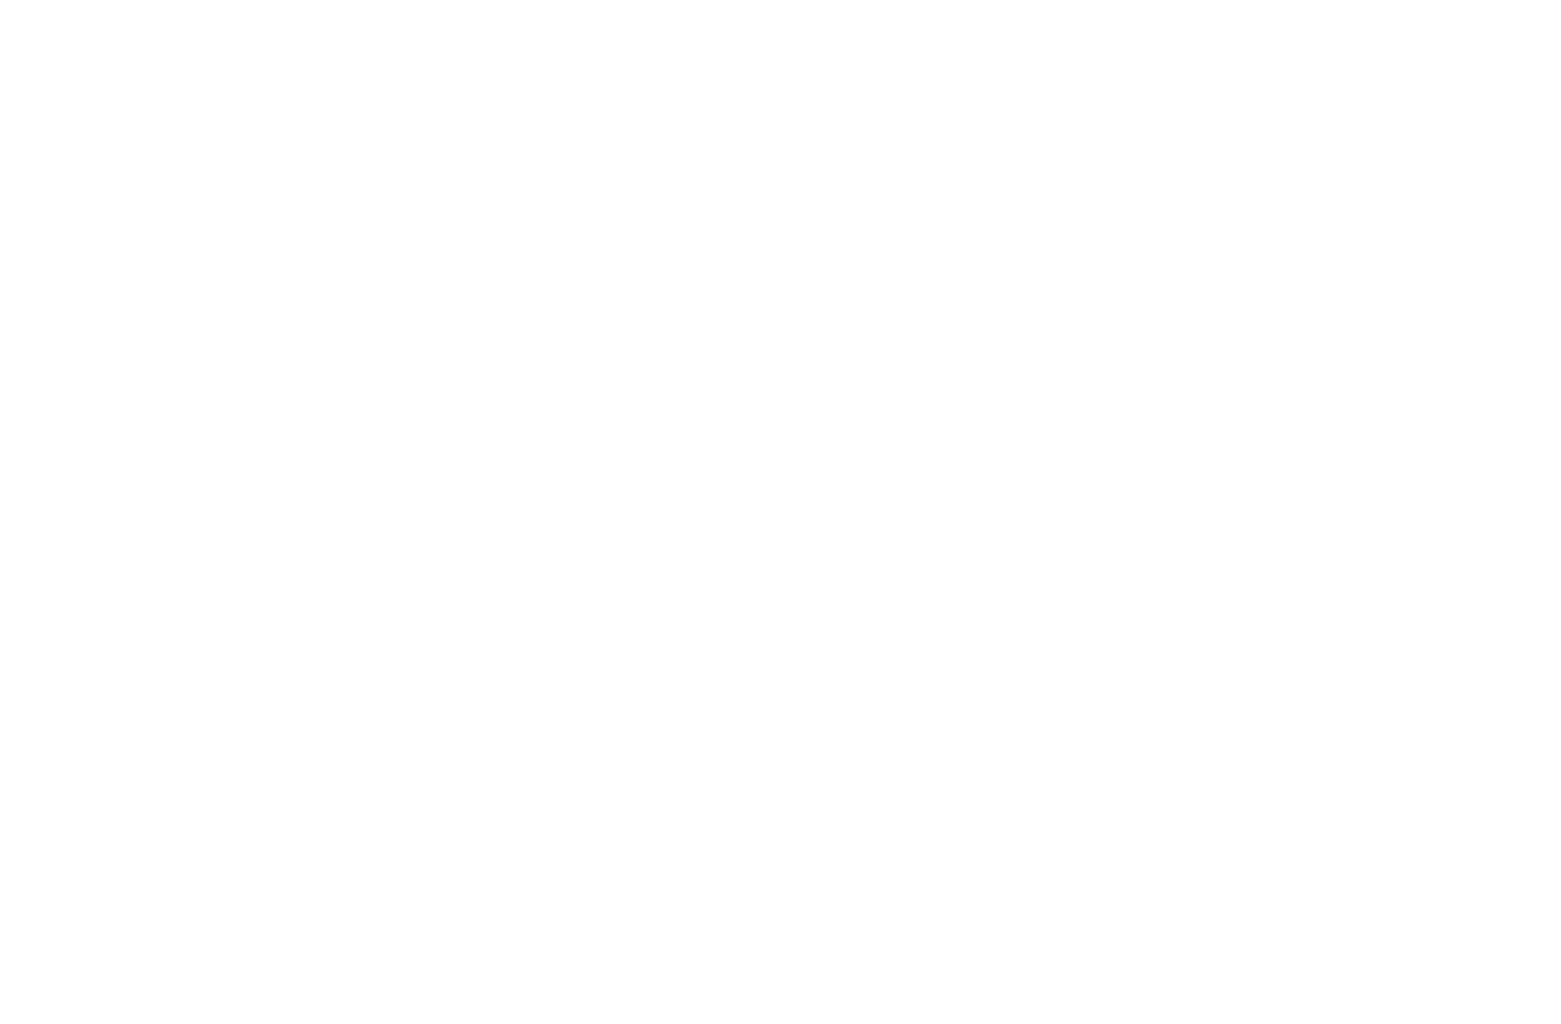 Small Loan Fund